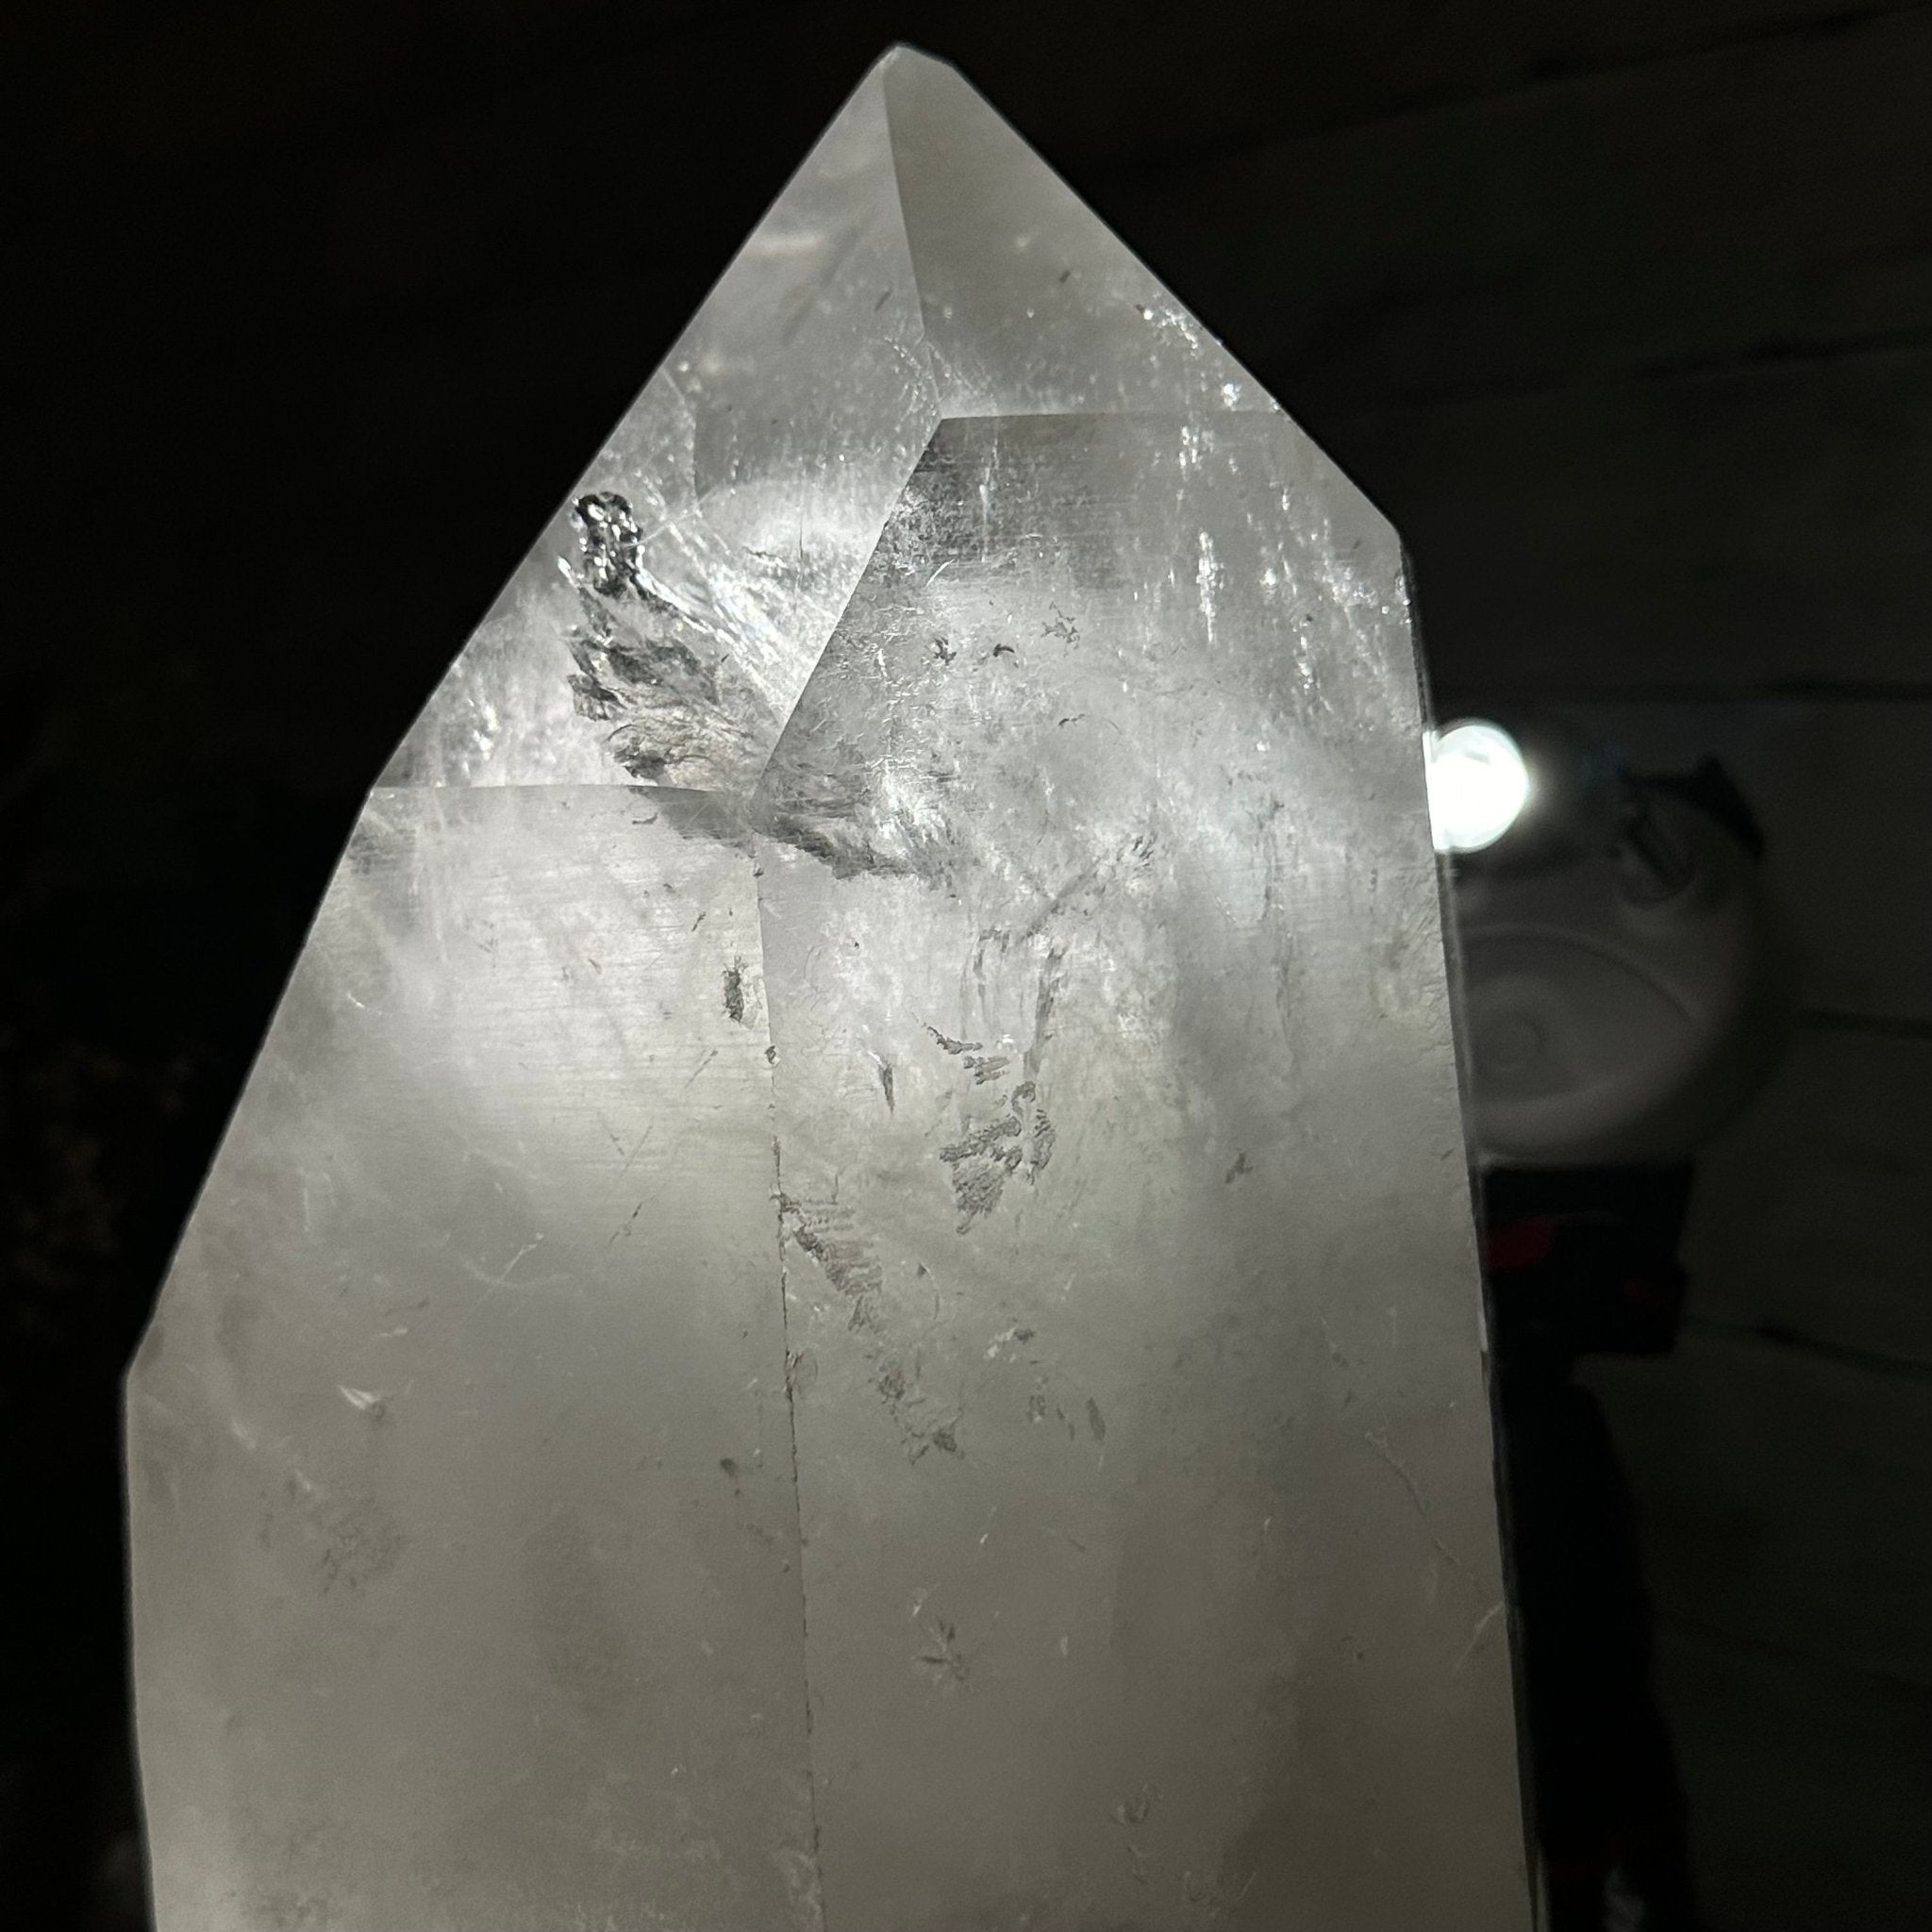 Clear Quartz Crystal Point on Rotating Base, 40.1 lbs & 18.4" Tall #3120CQ-008 - Brazil GemsBrazil GemsClear Quartz Crystal Point on Rotating Base, 40.1 lbs & 18.4" Tall #3120CQ-008Crystal Points3120CQ-008